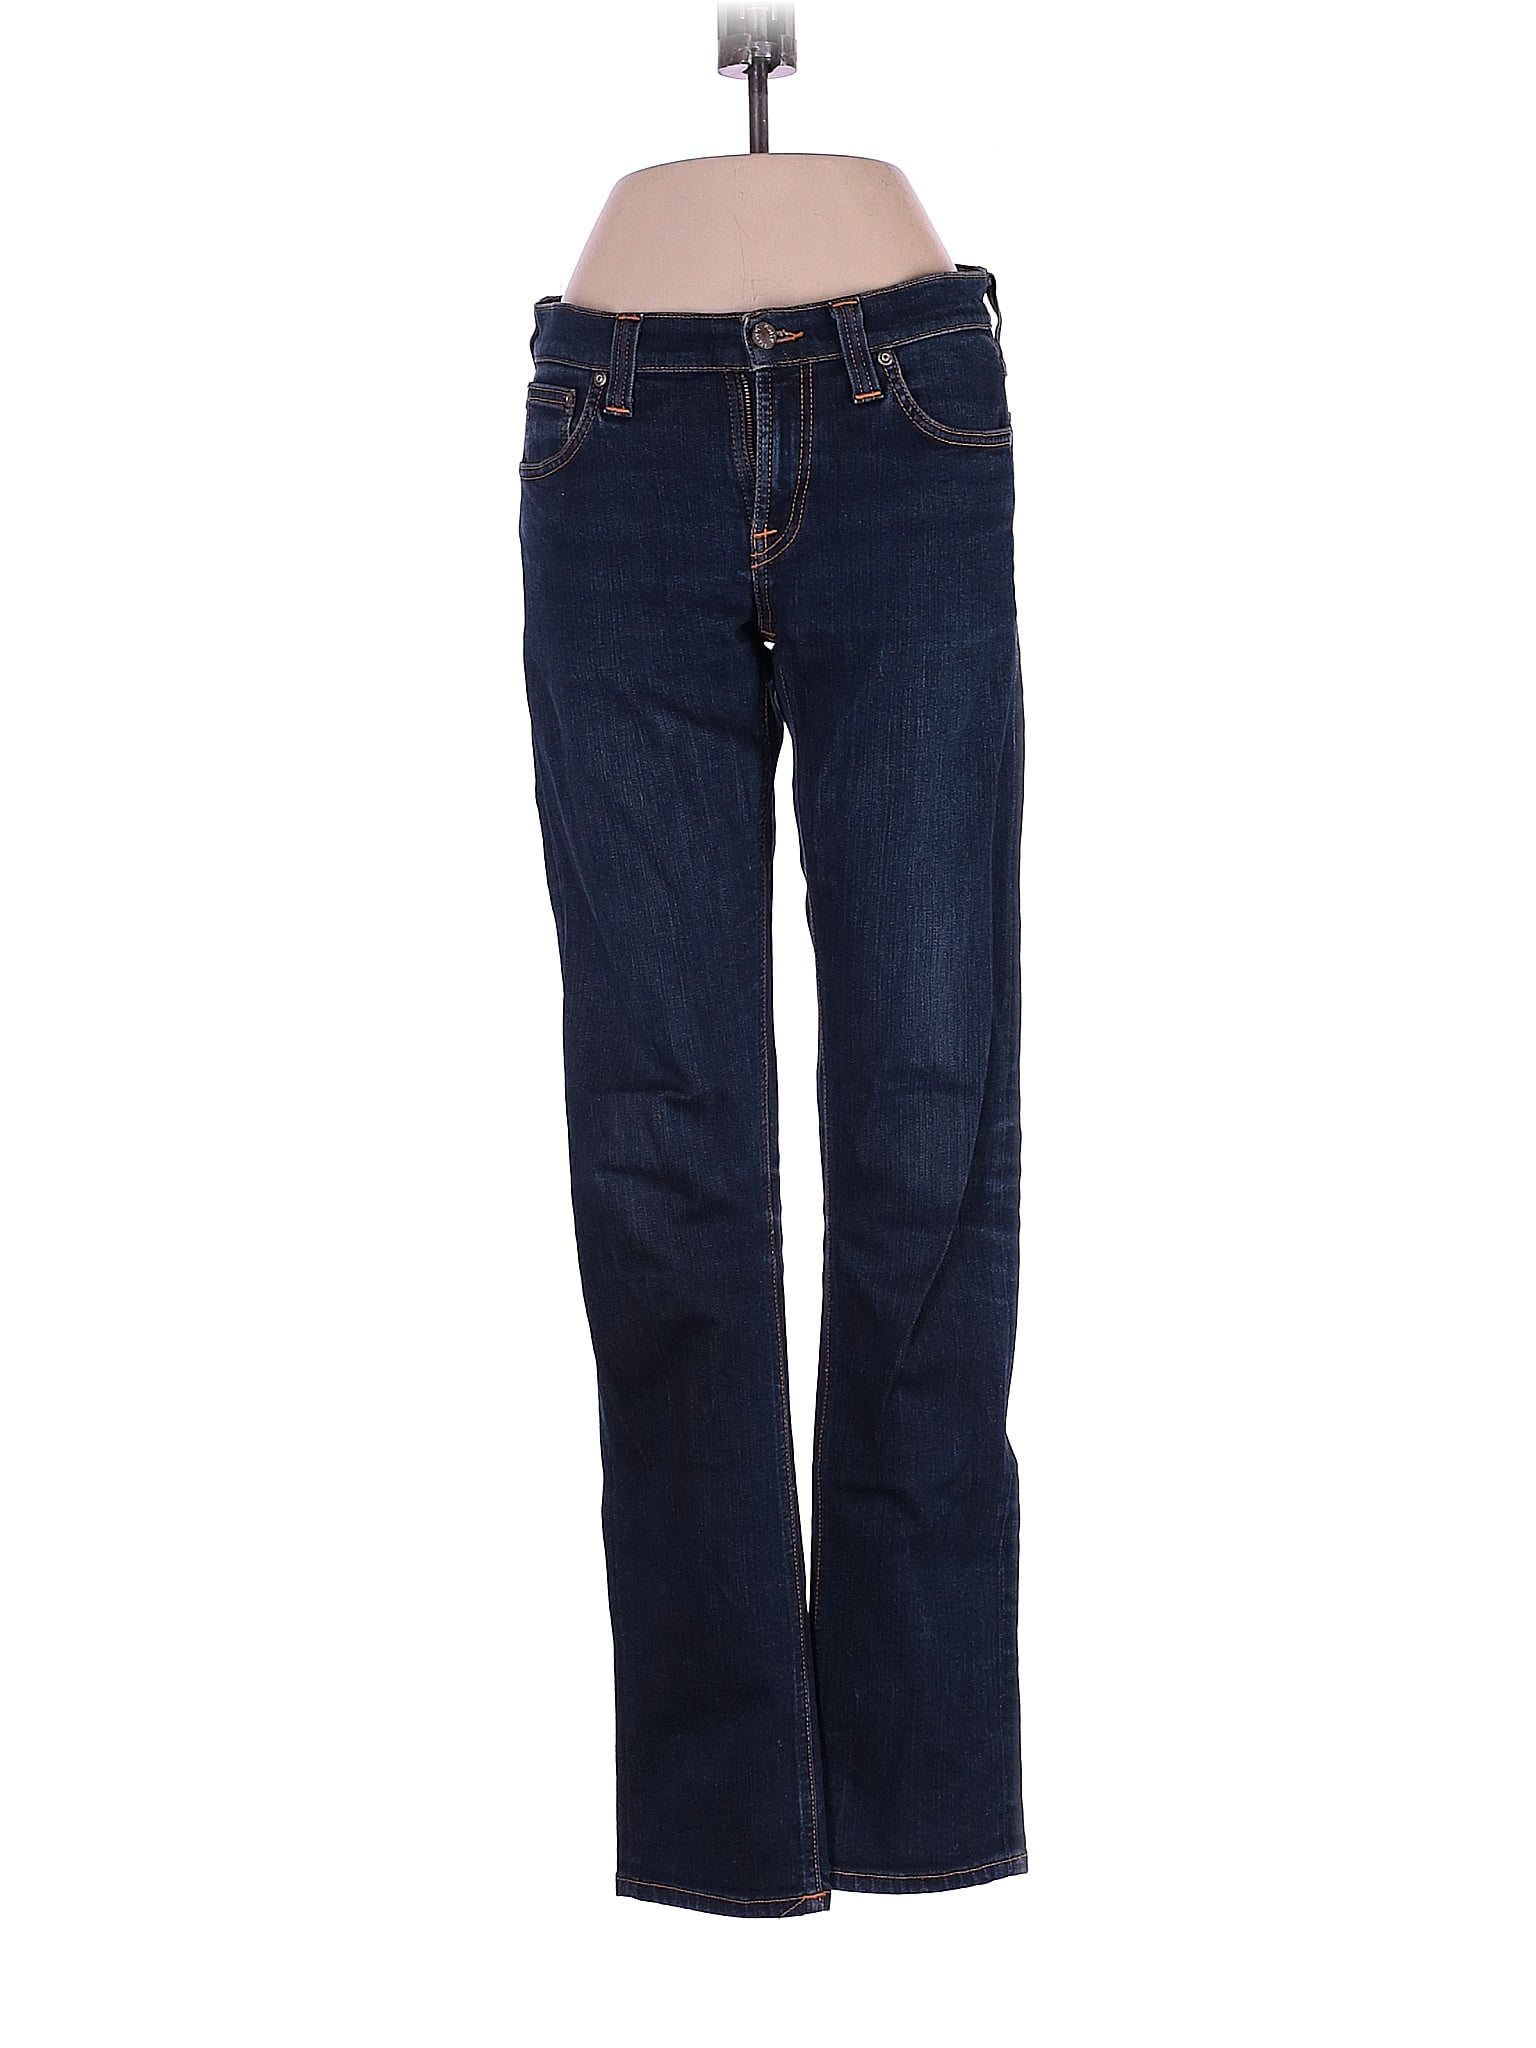 Nudie Jeans Solid Blue Jeans 26 Waist - 78% off | thredUP